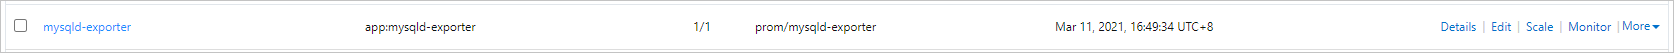 mysqld-exporter application